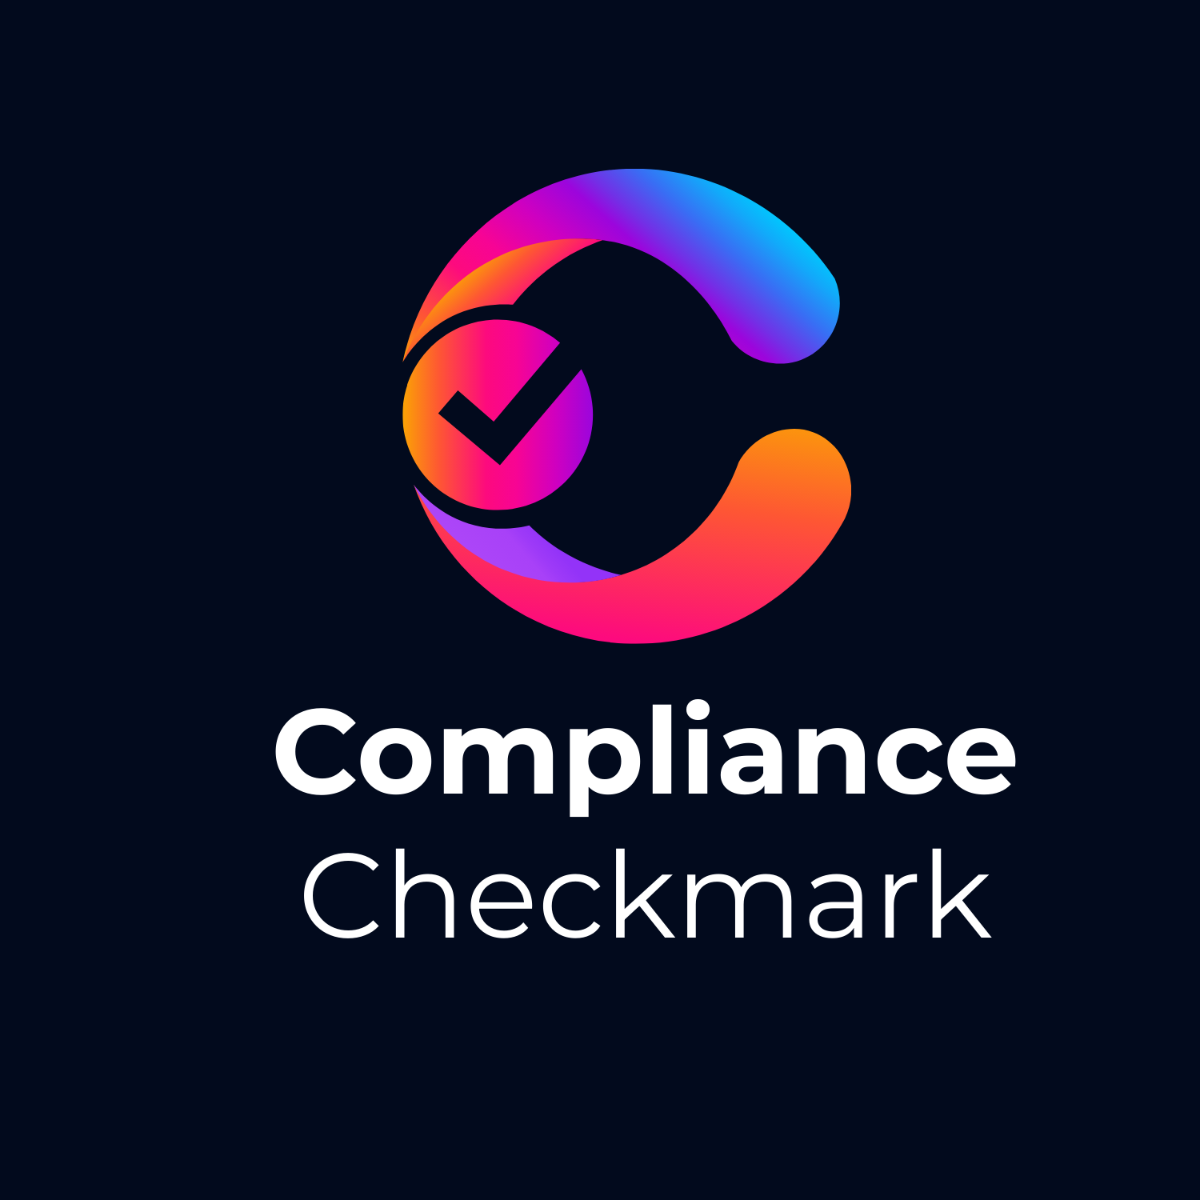 Compliance Checkmark Logo Template